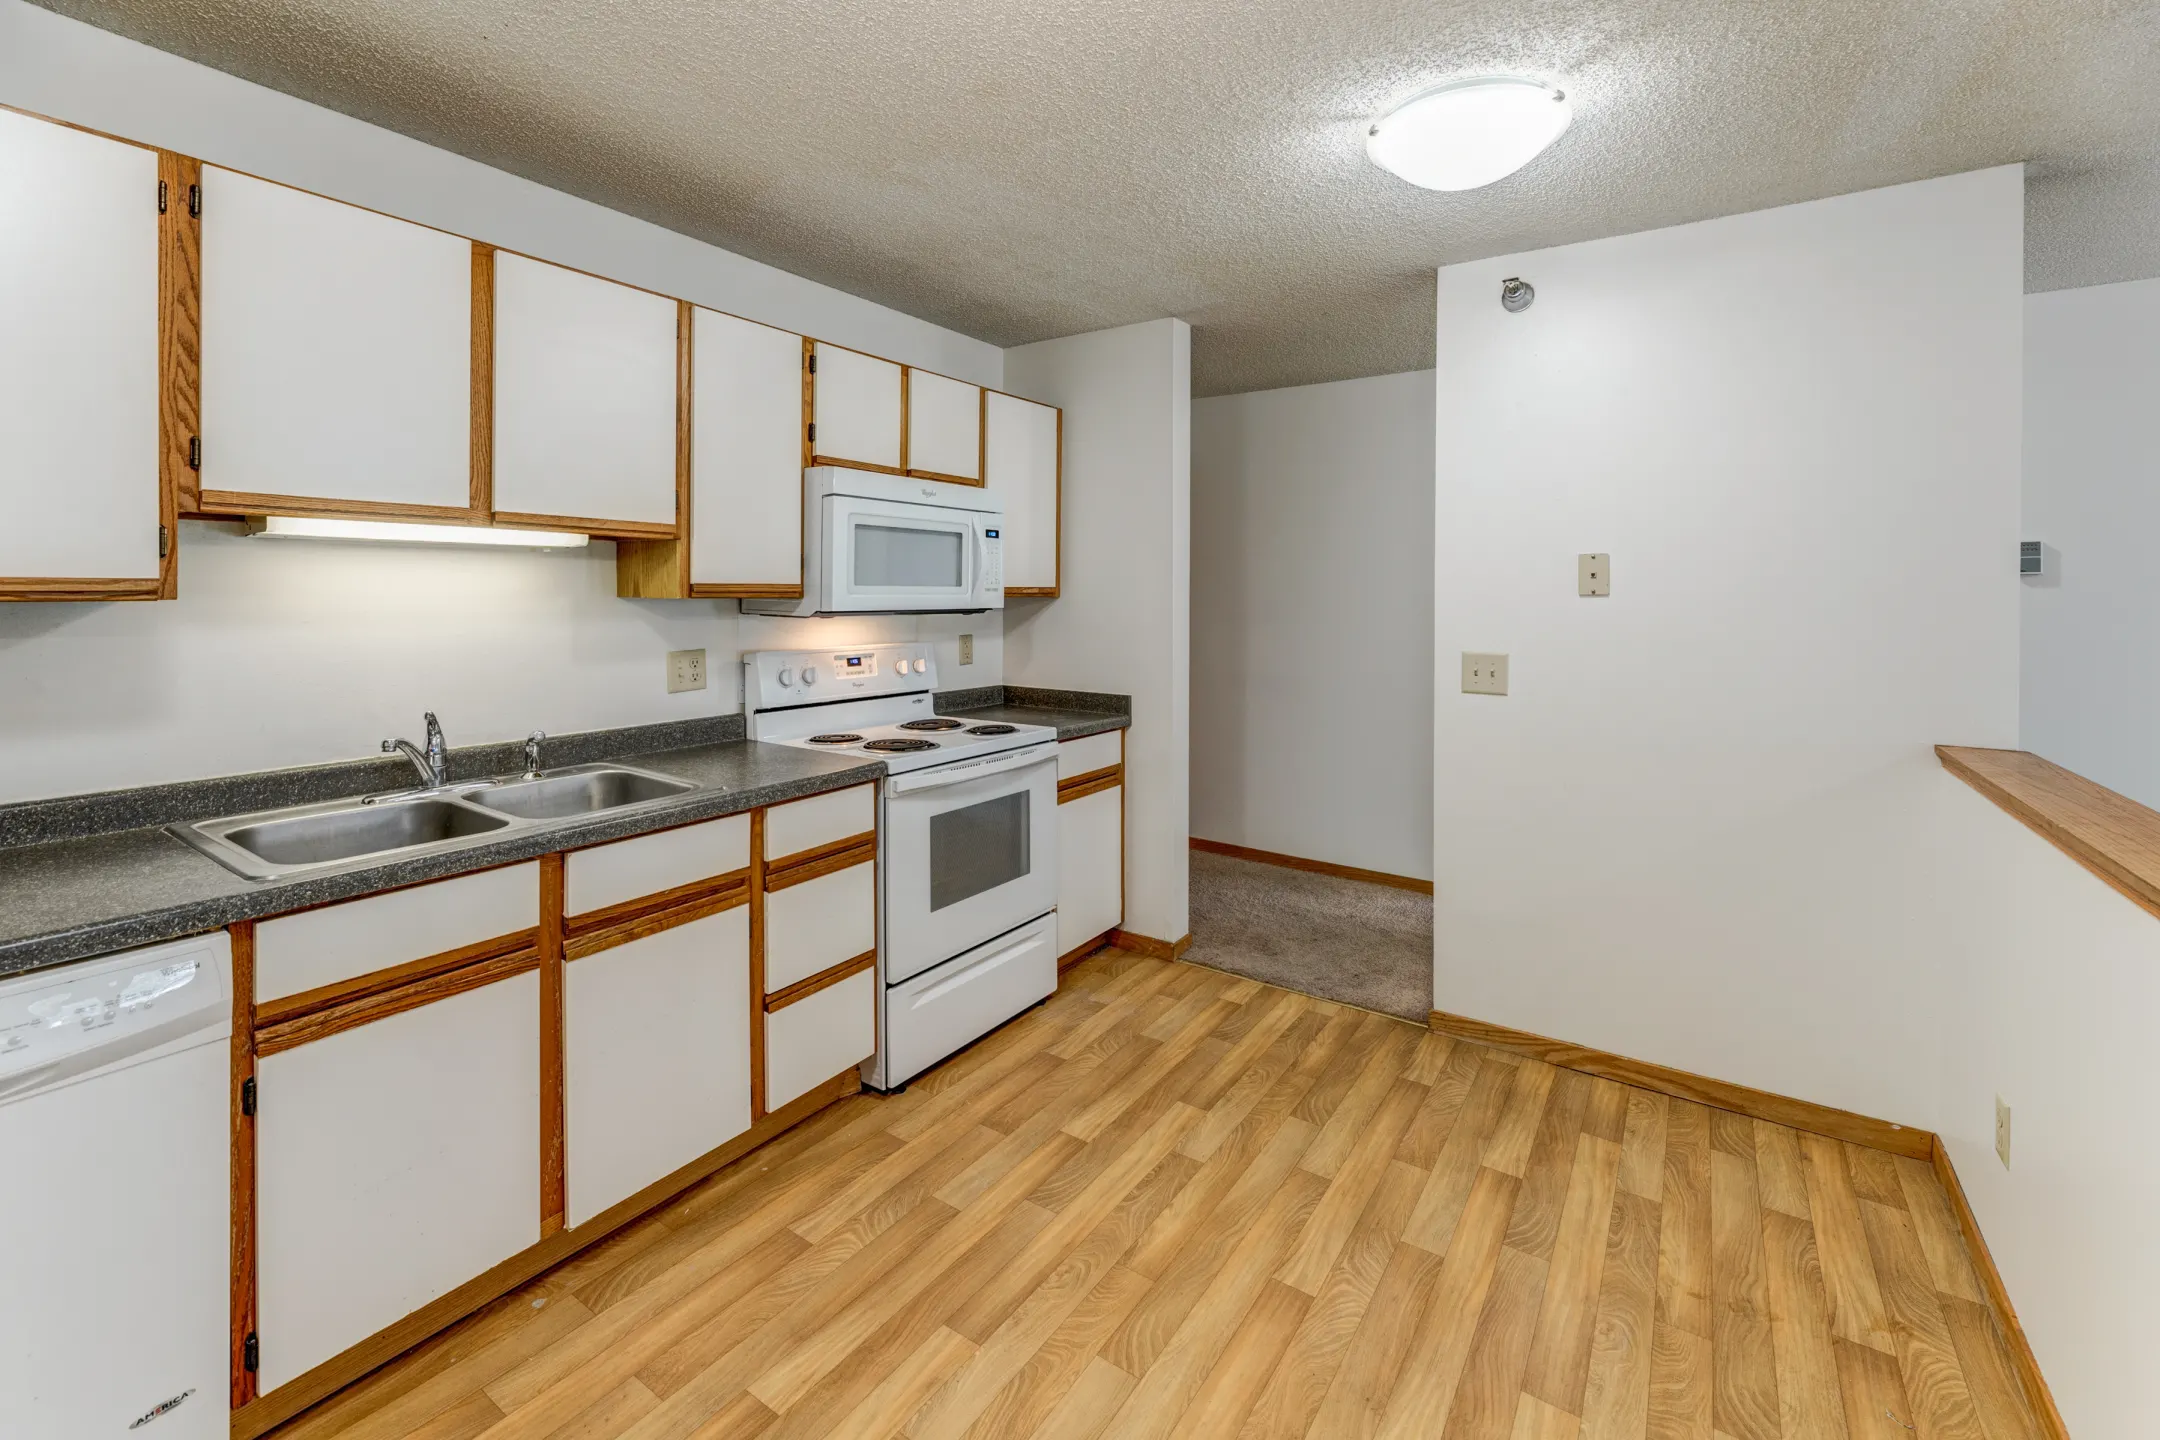 Kitchen - Oaks Lincoln Apartments - Edina, MN